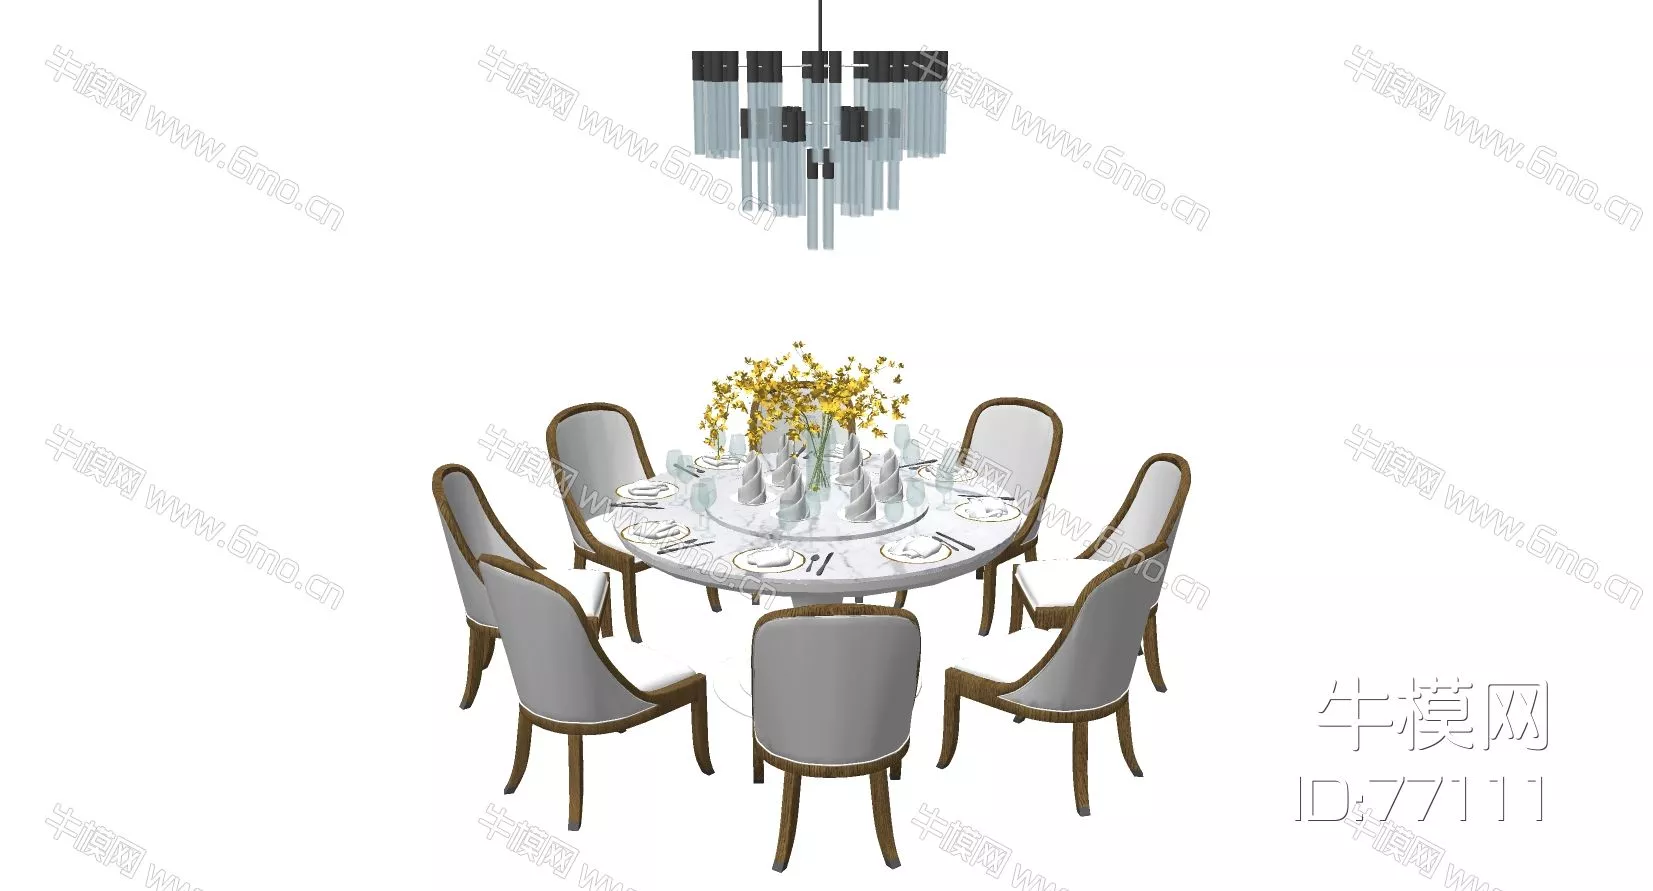 AMERICAN DINING TABLE SET - SKETCHUP 3D MODEL - ENSCAPE - 77111